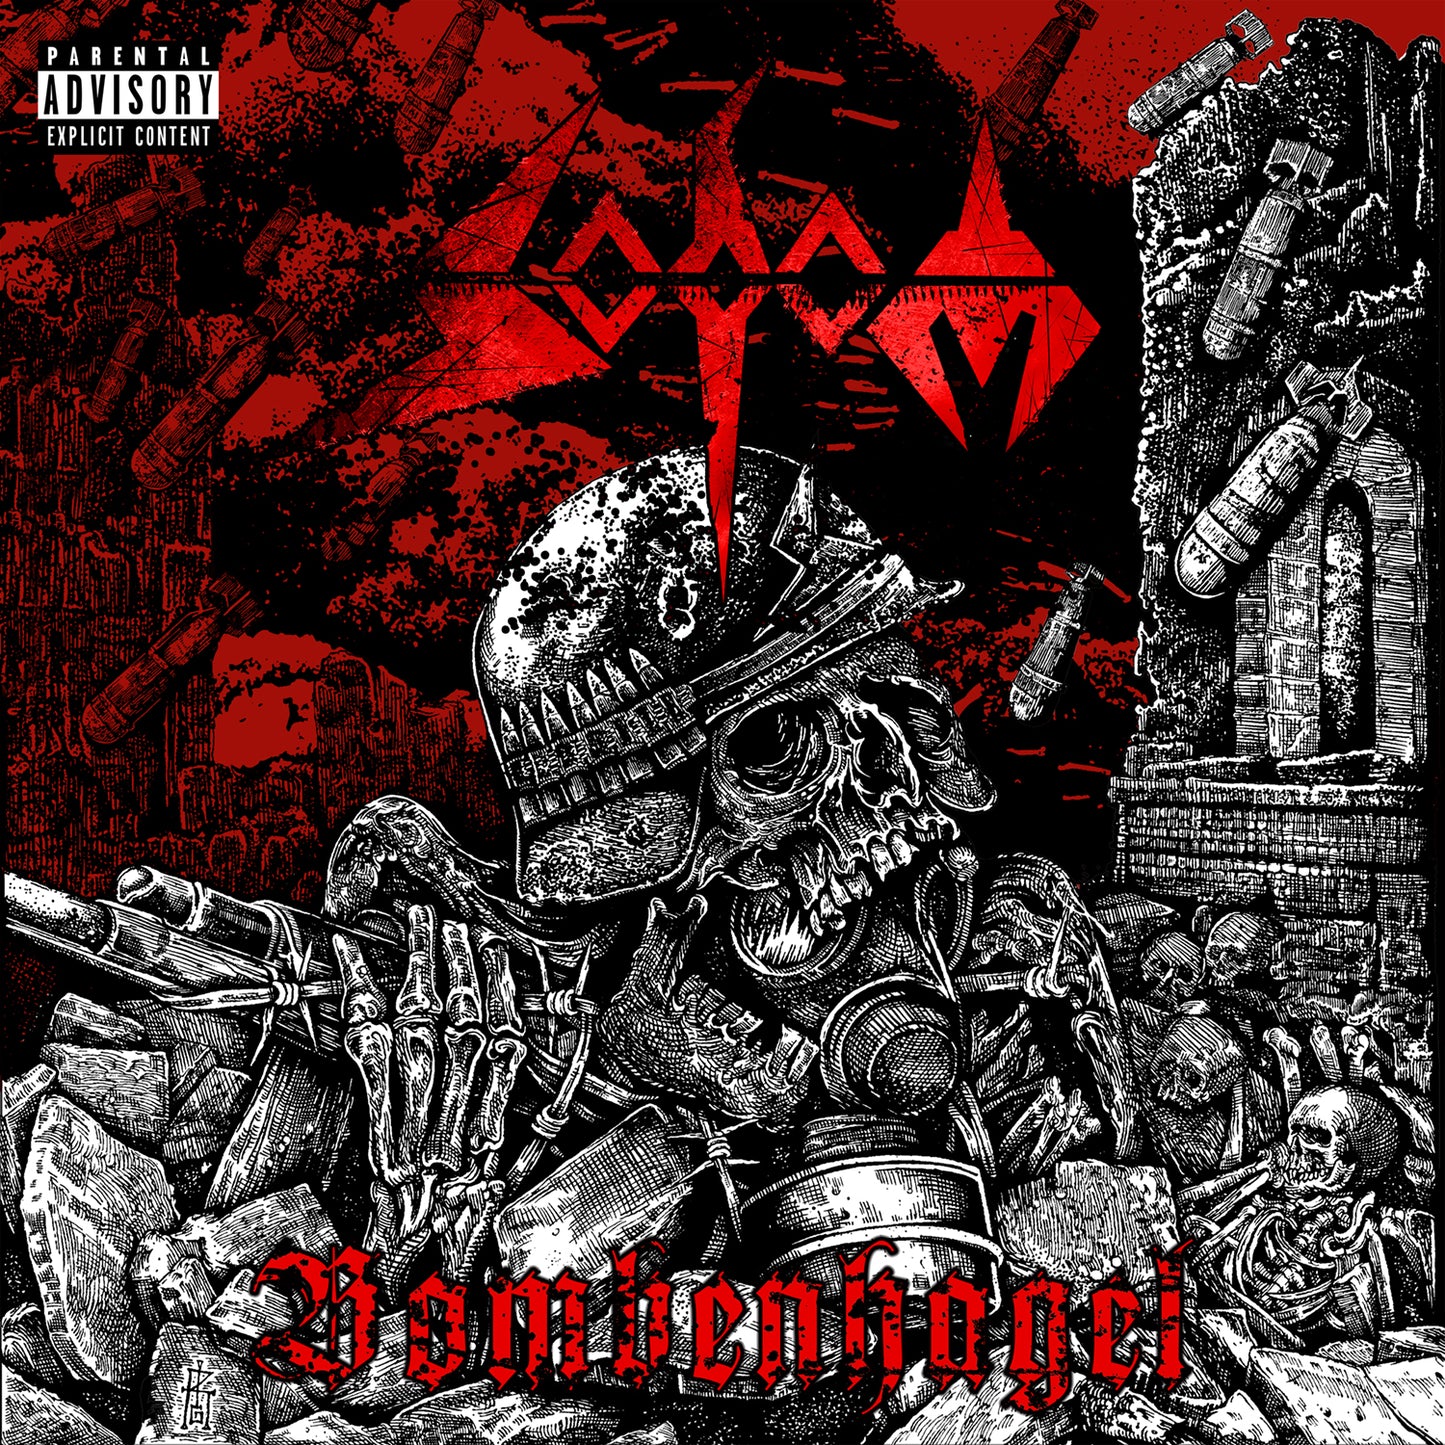 Sodom "Bombenhagel" CD